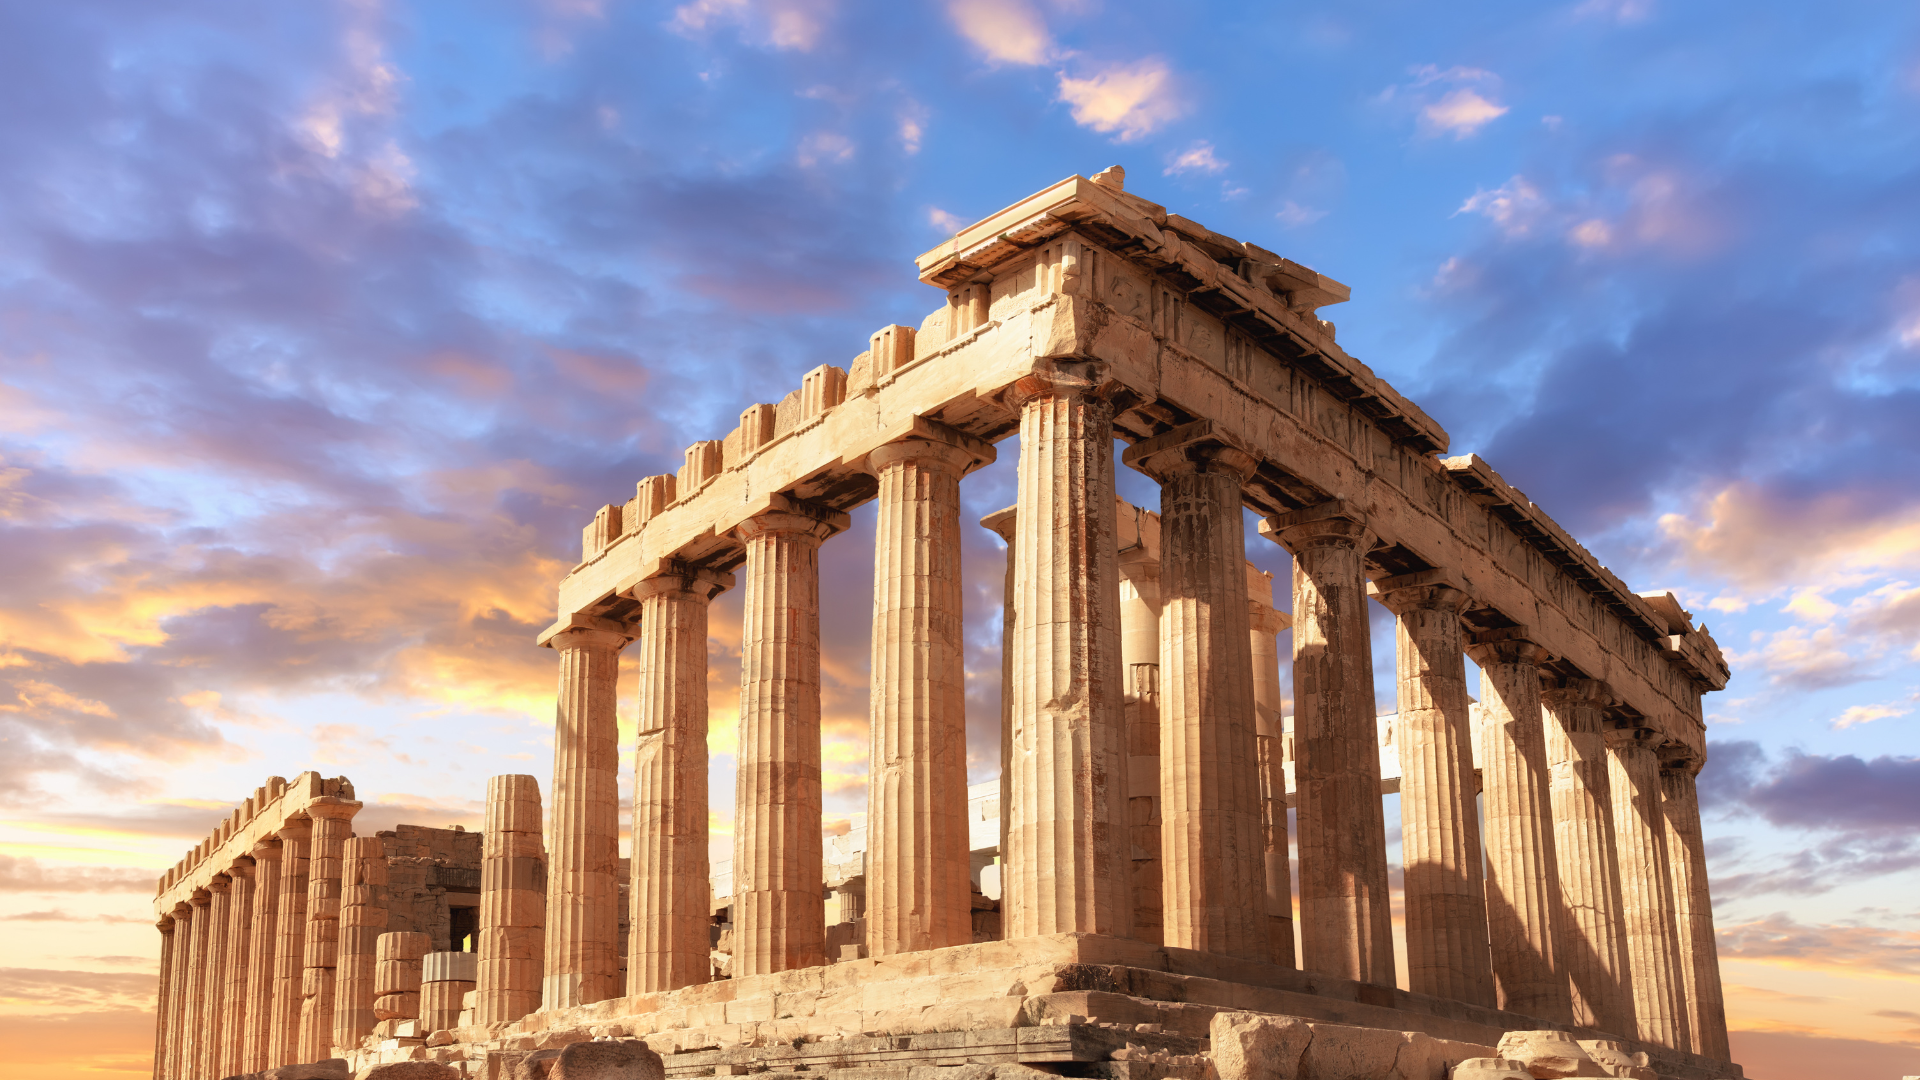 Explore the Acropolis in Athens